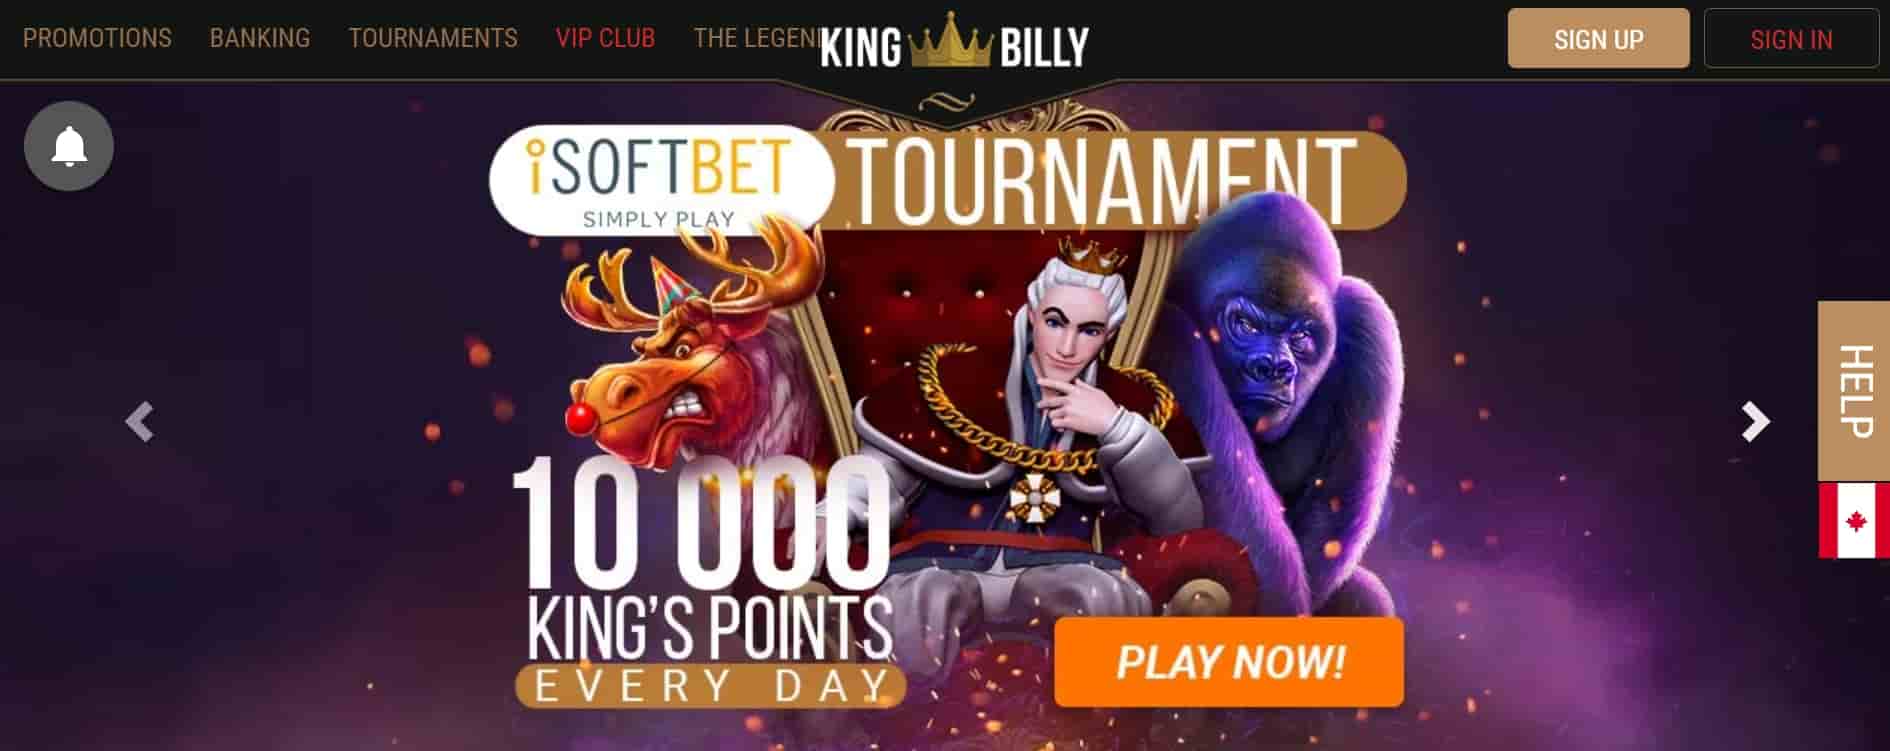 king billy online casino games tournament